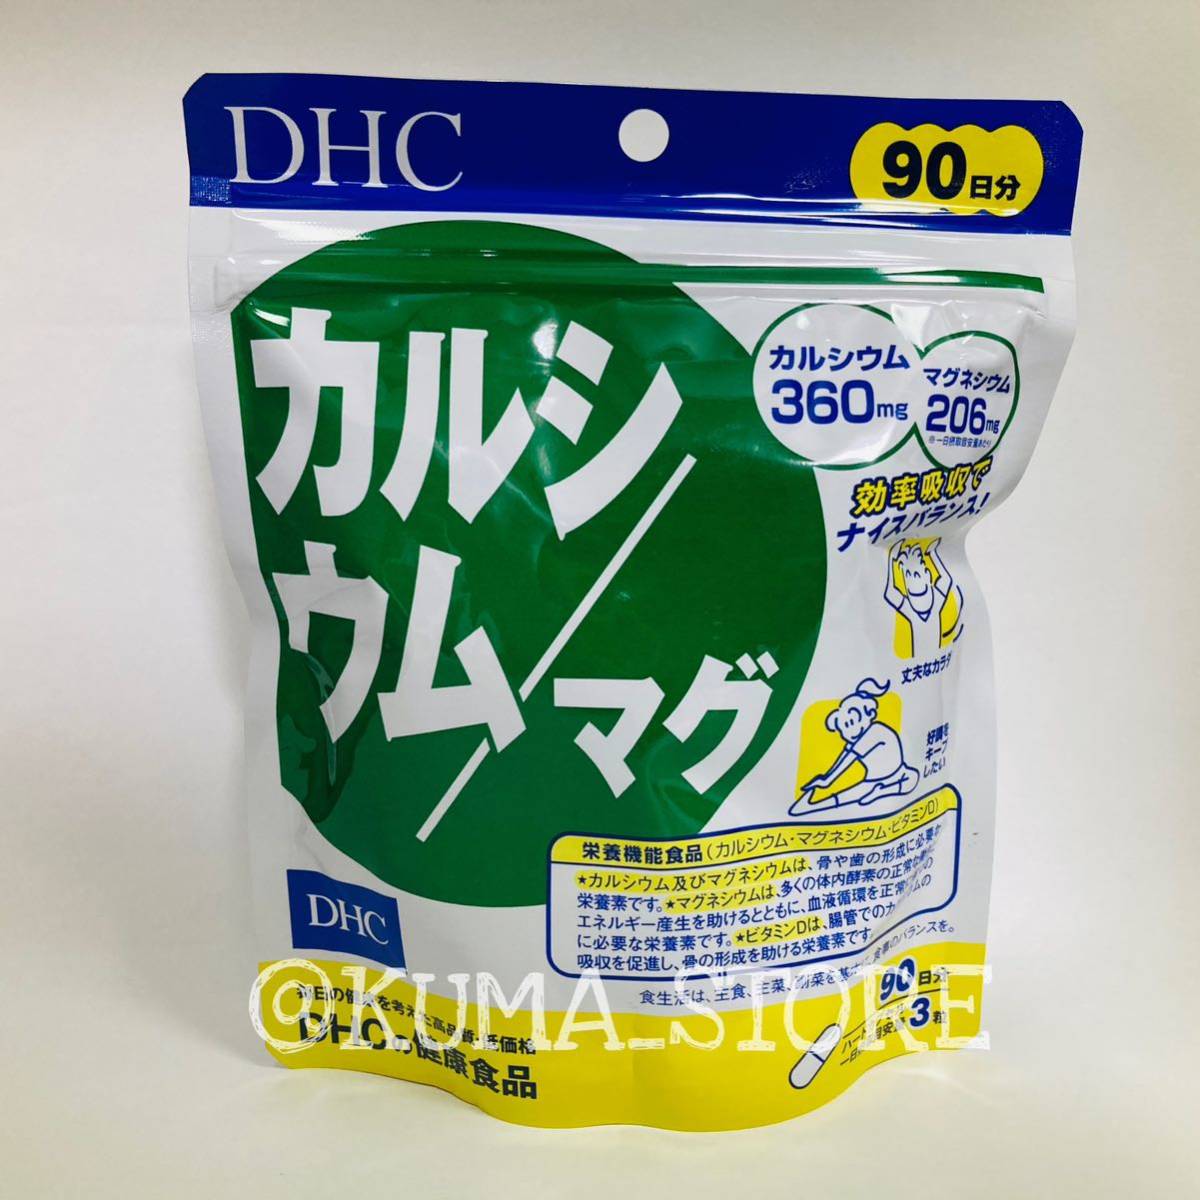 2 sack DHC calcium mug 90 day minute health food Magne sium